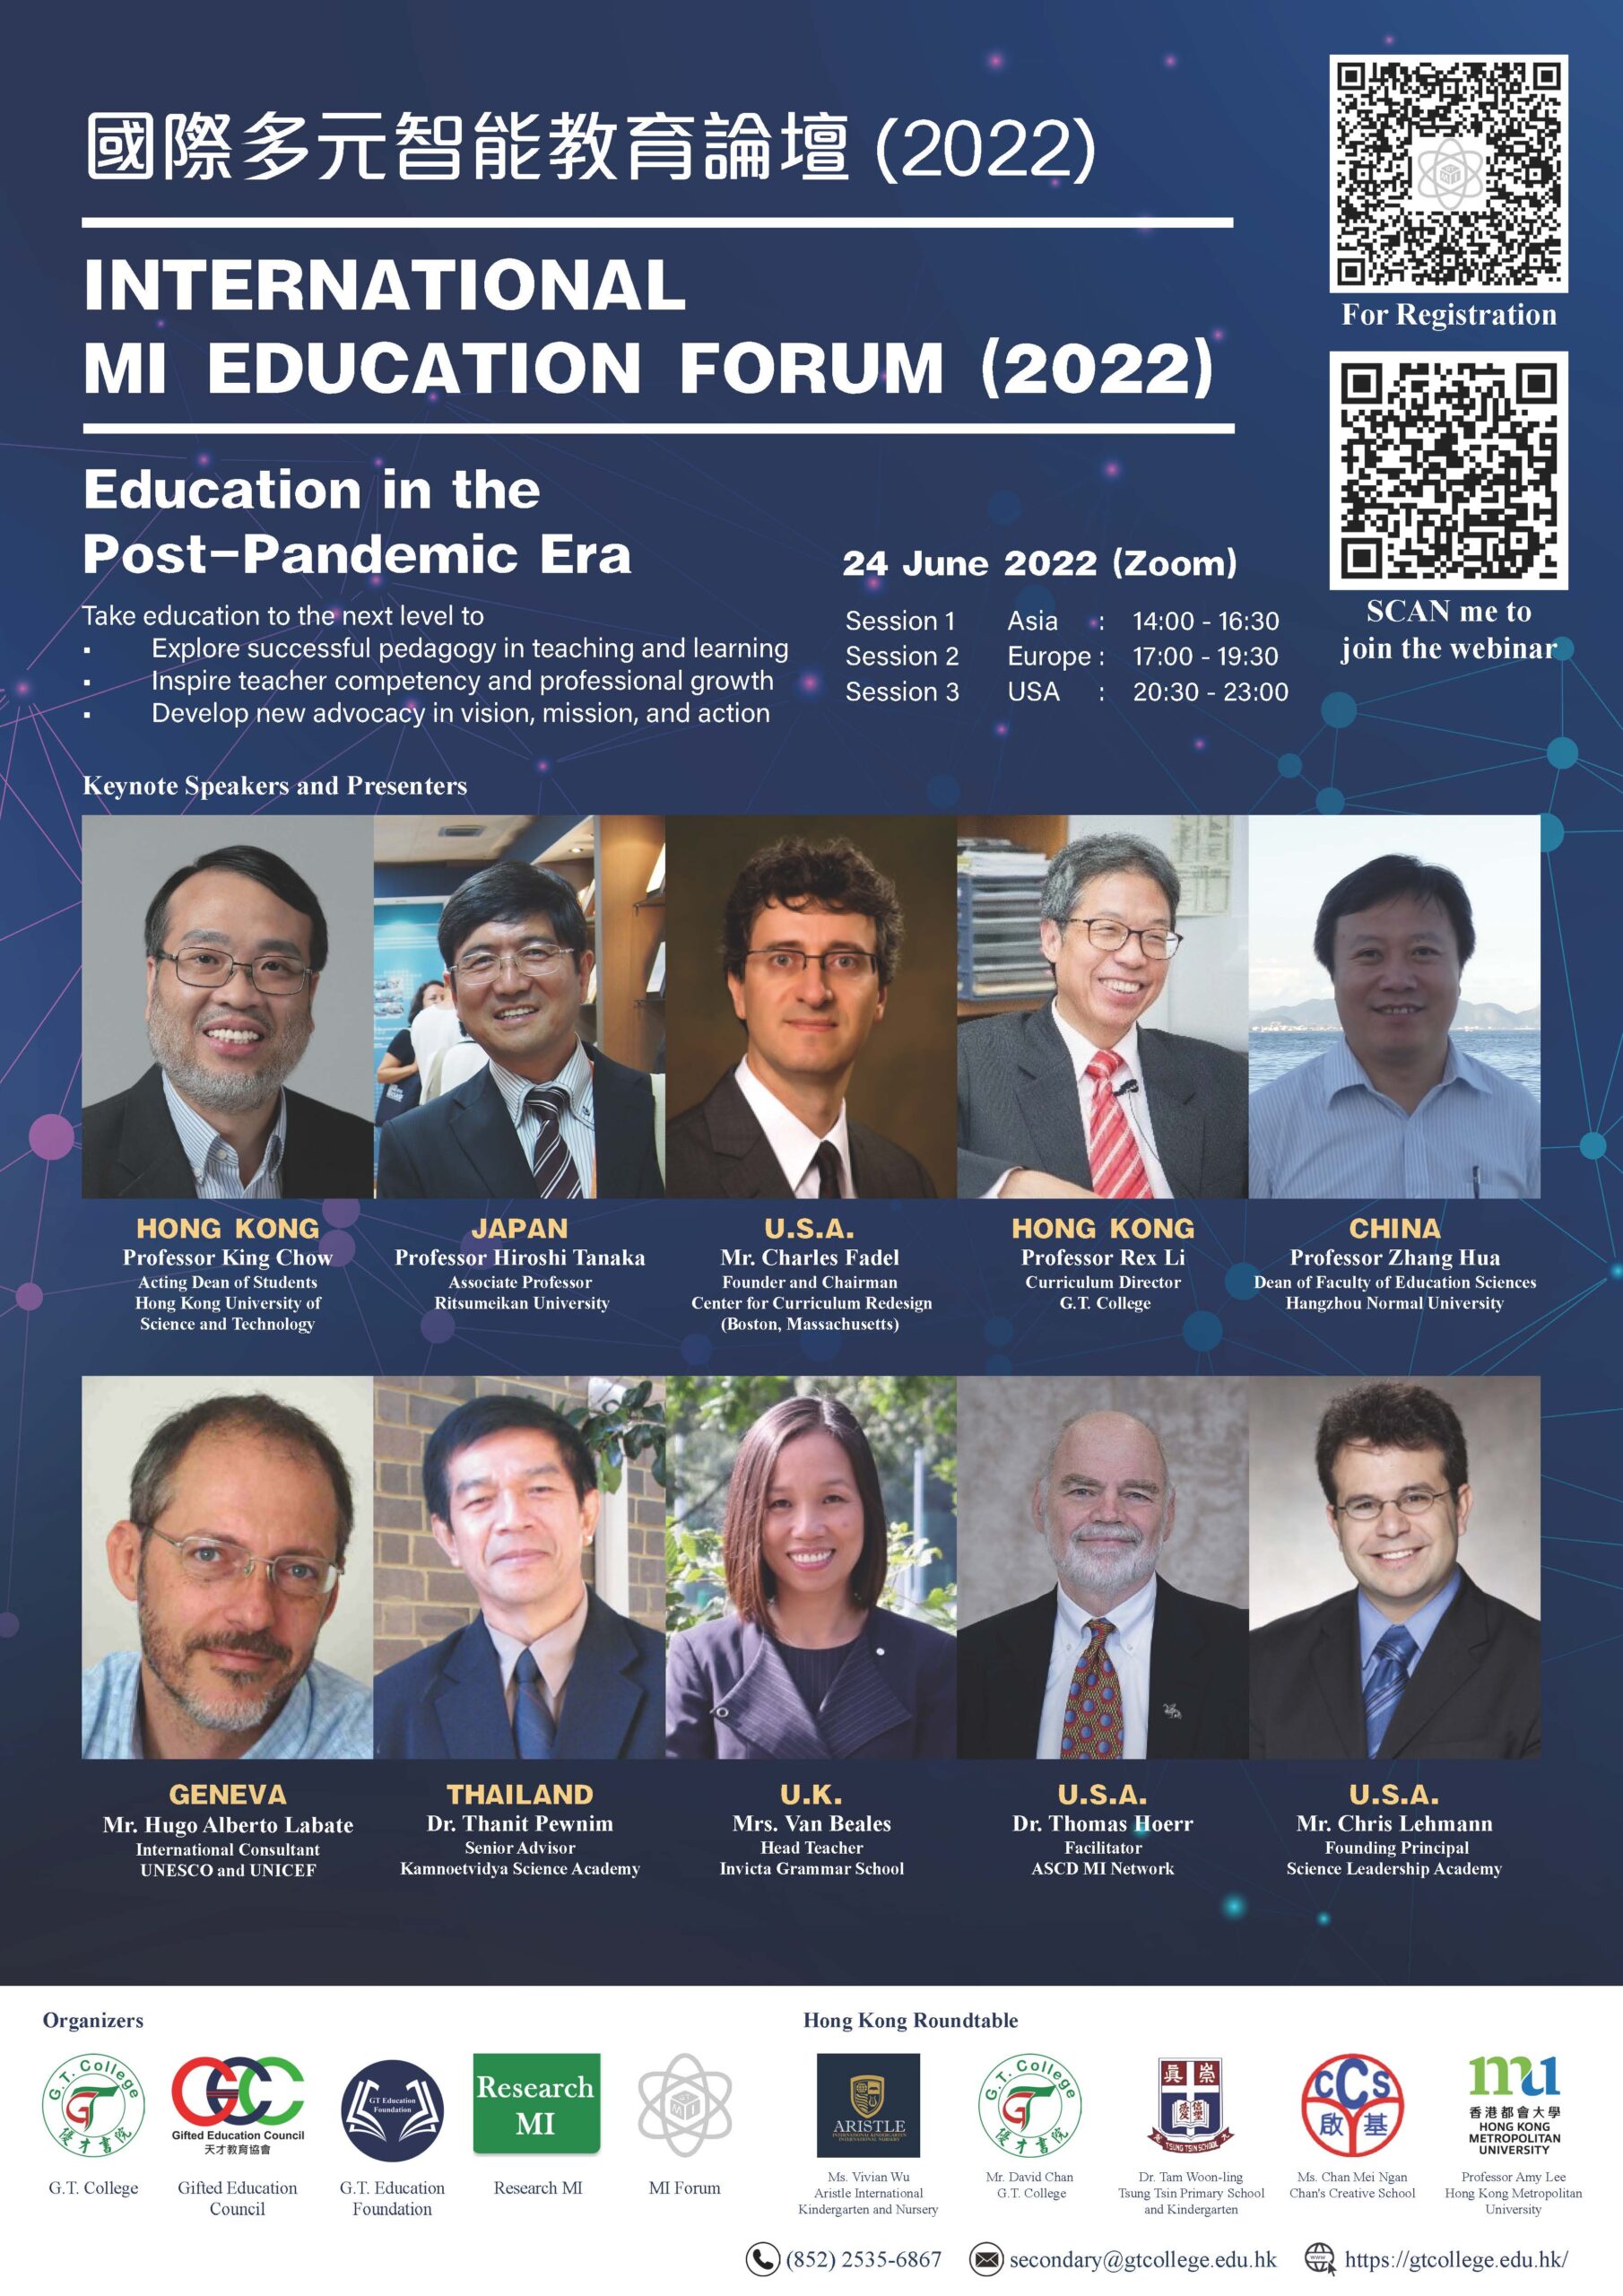 INTERNATIONAL MI EDUCATION FORUM (2022)